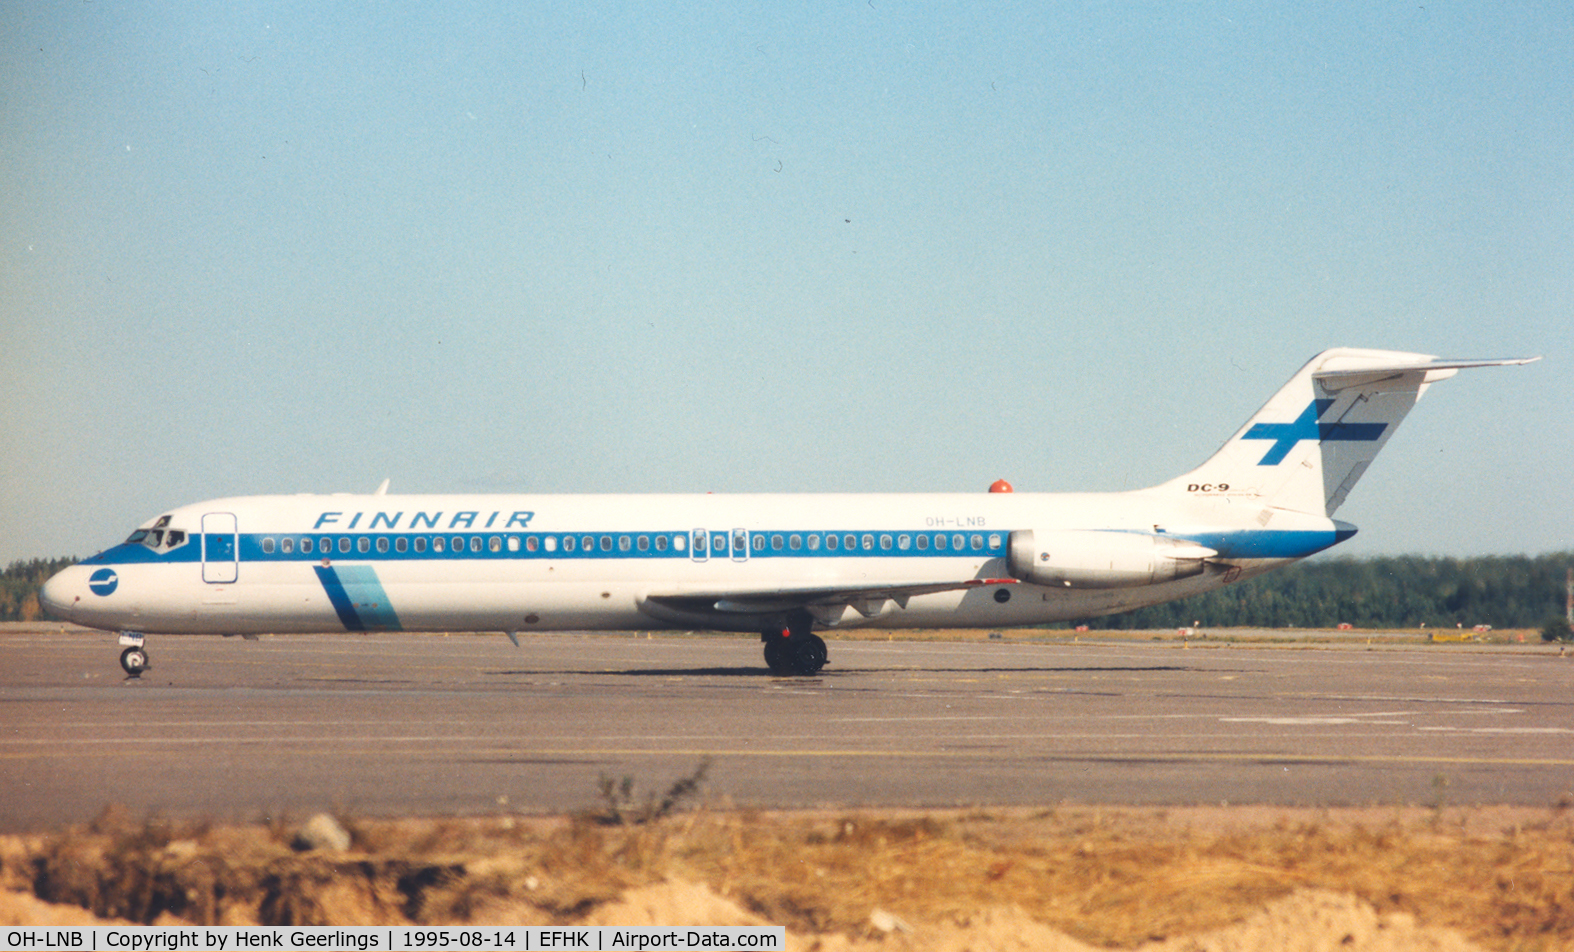 OH-LNB, 1974 Douglas DC-9-41 C/N 47604, Finnair